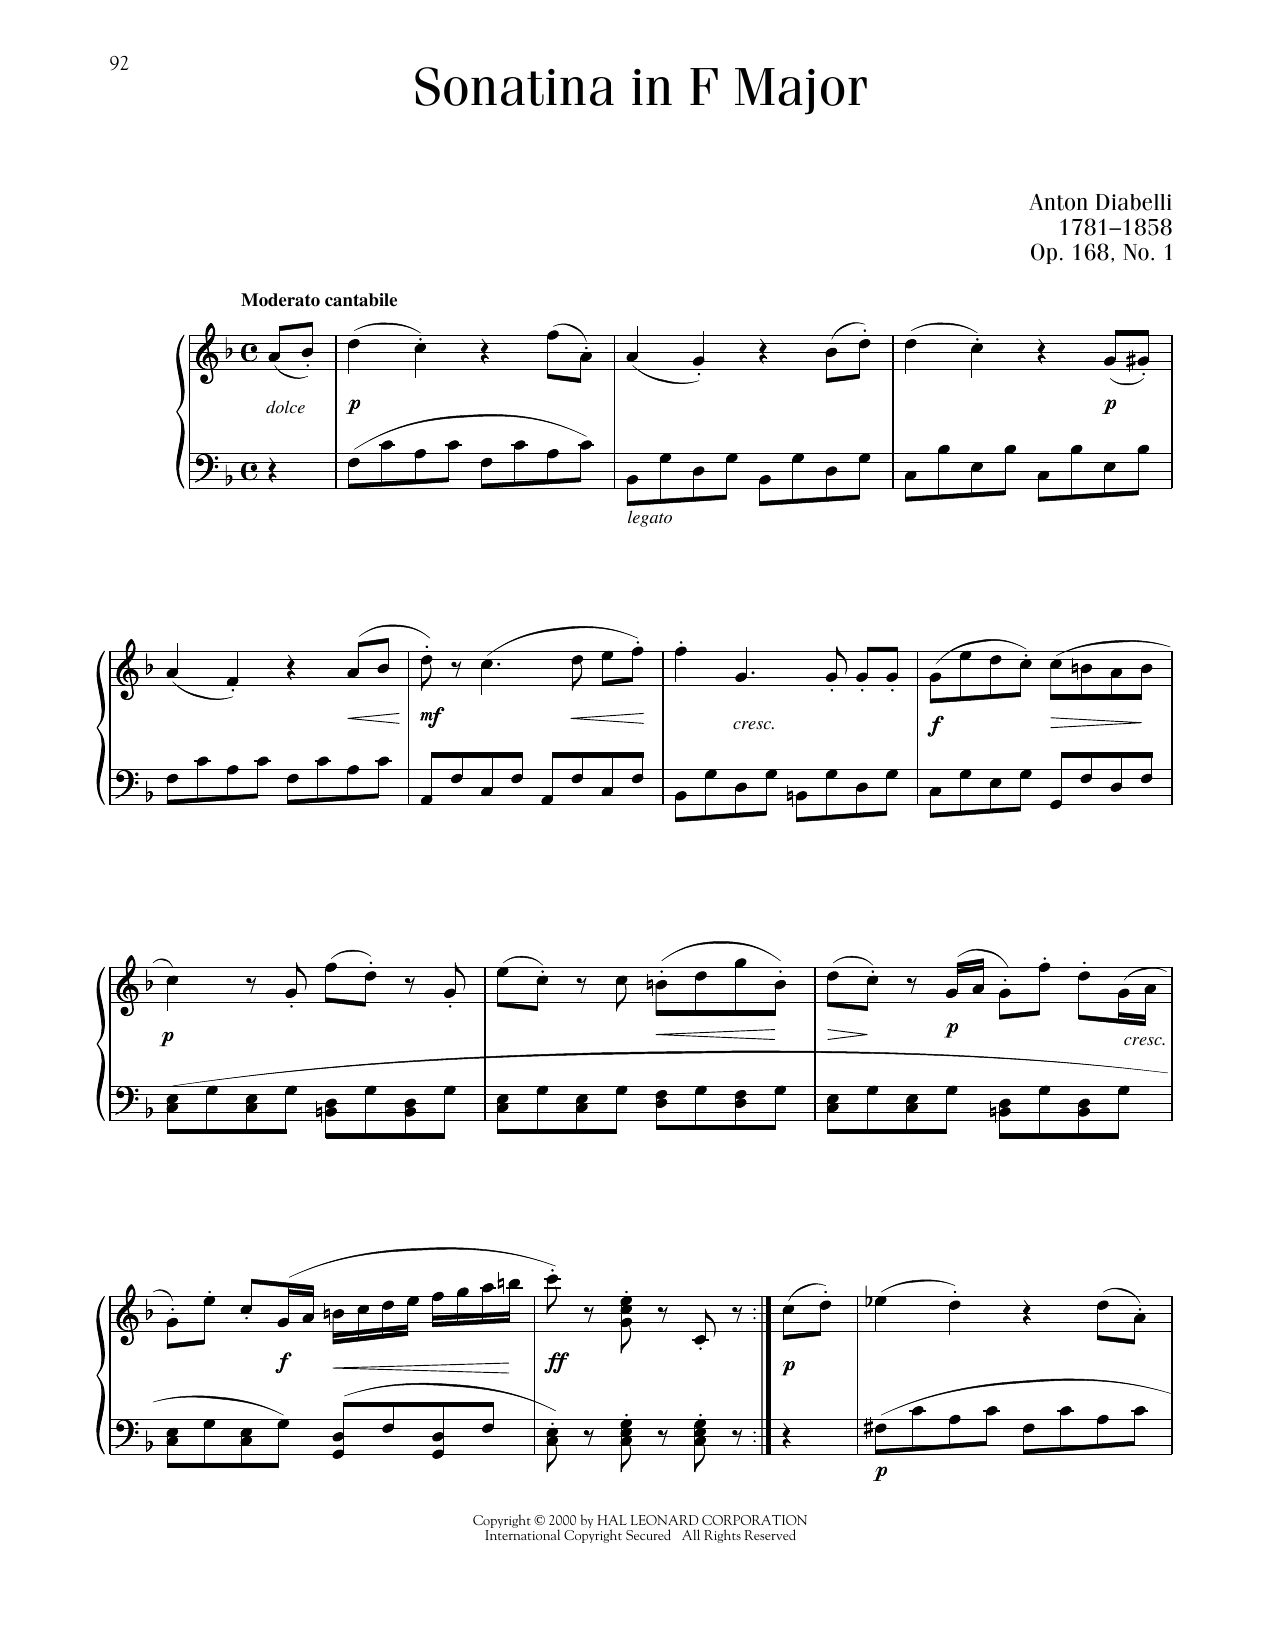 Anton Diabelli Sonatina in F, Op. 168, No. 1 sheet music notes printable PDF score